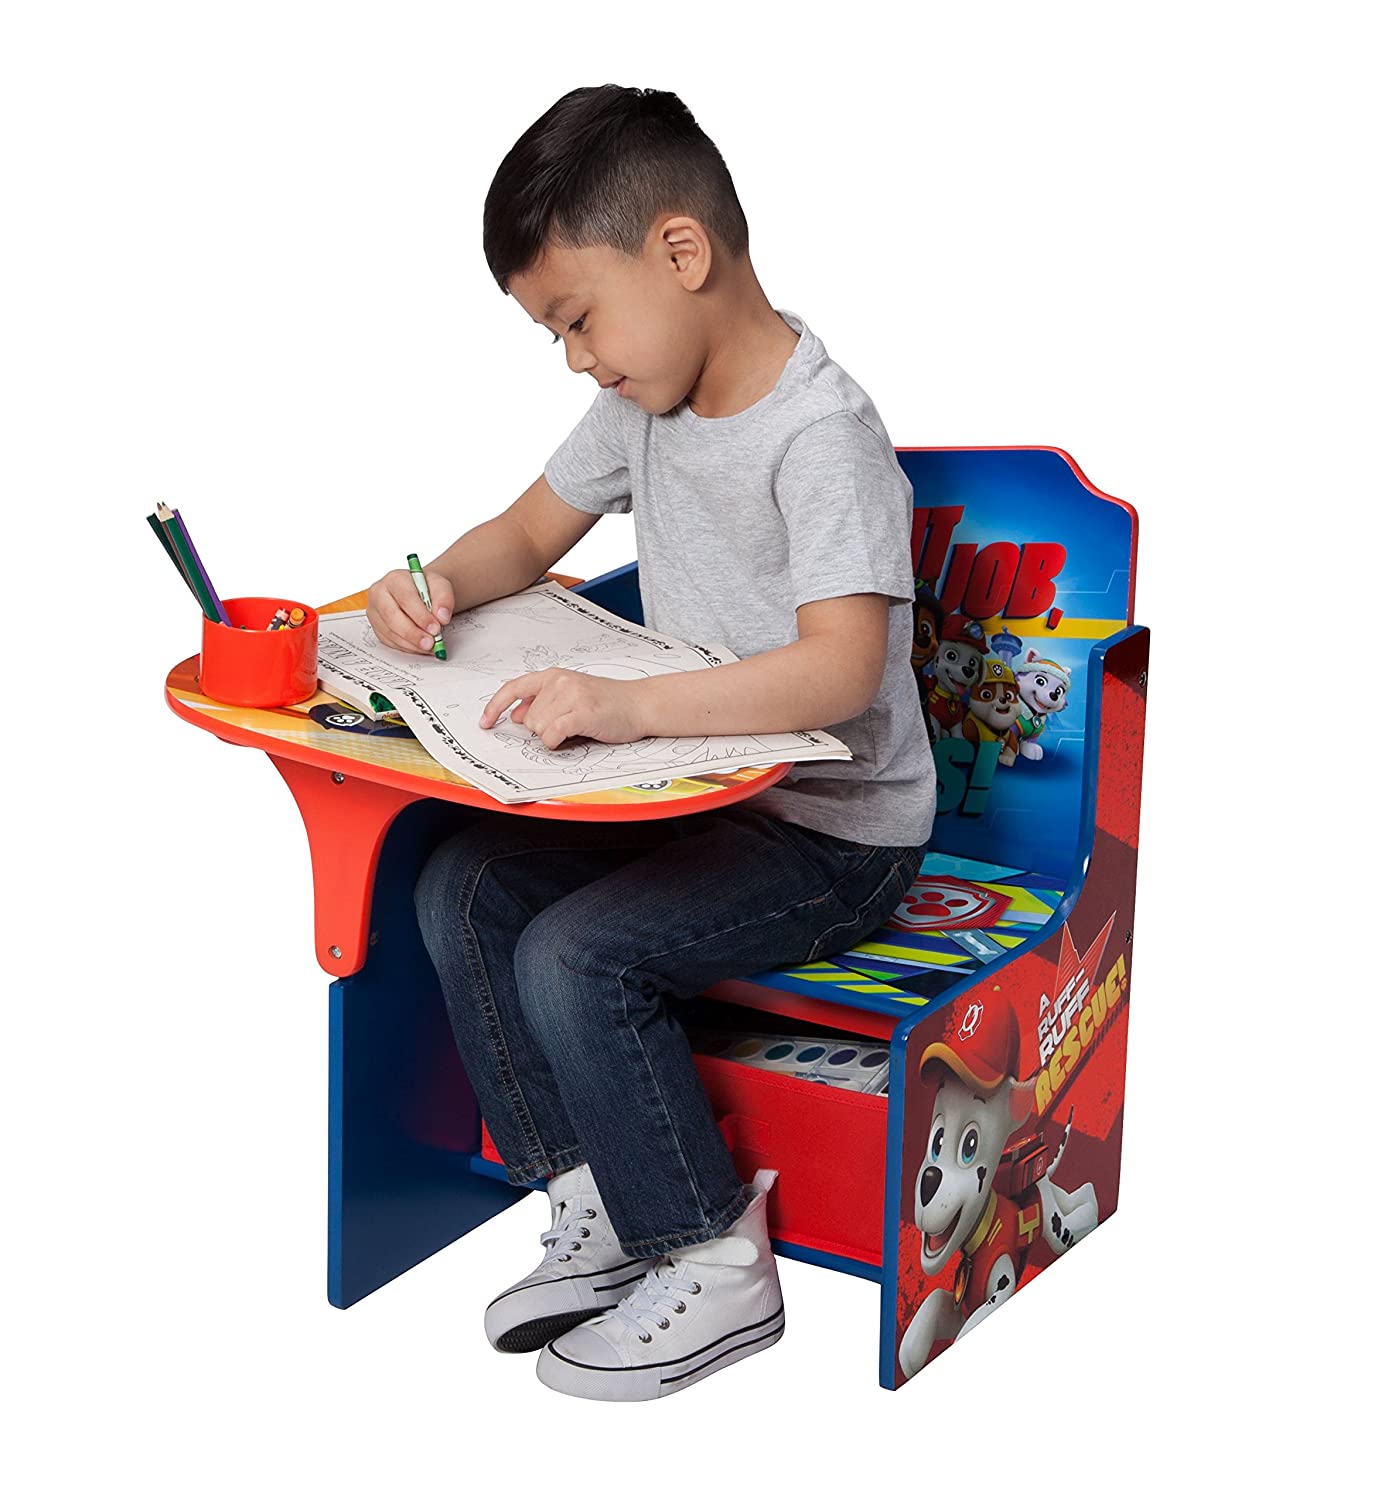 Delta Children Chair Desk with Storage Bin - Ideal for Arts & Crafts, Snack Time, Homeschooling, Homework & More, Nick Jr. PAW Patrol